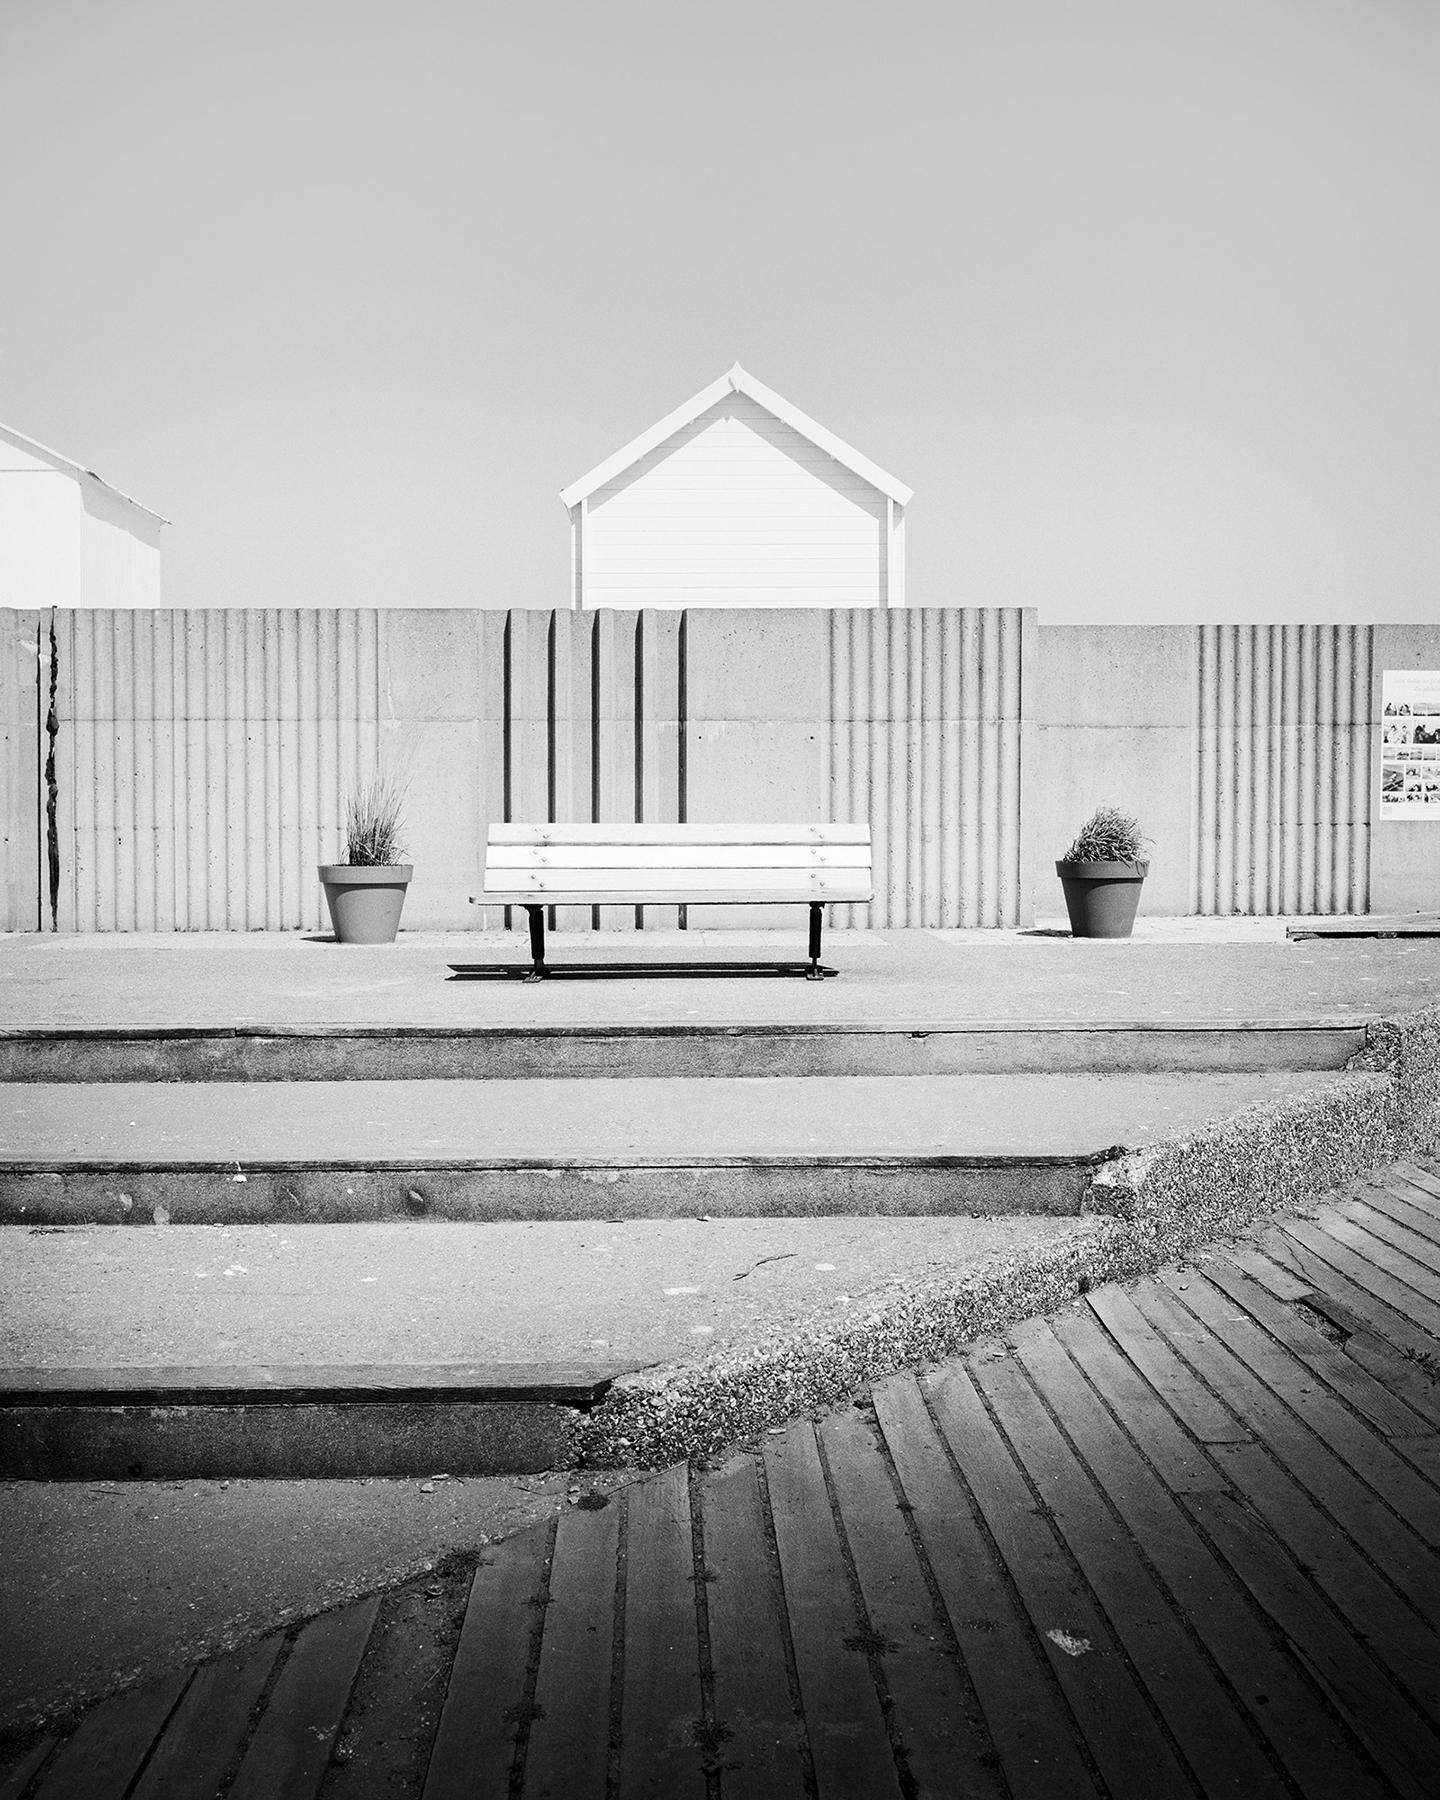 Gerald Berghammer Landscape Photograph - Esplanade, Beach Huts, France, minimalist black and white landscape photography